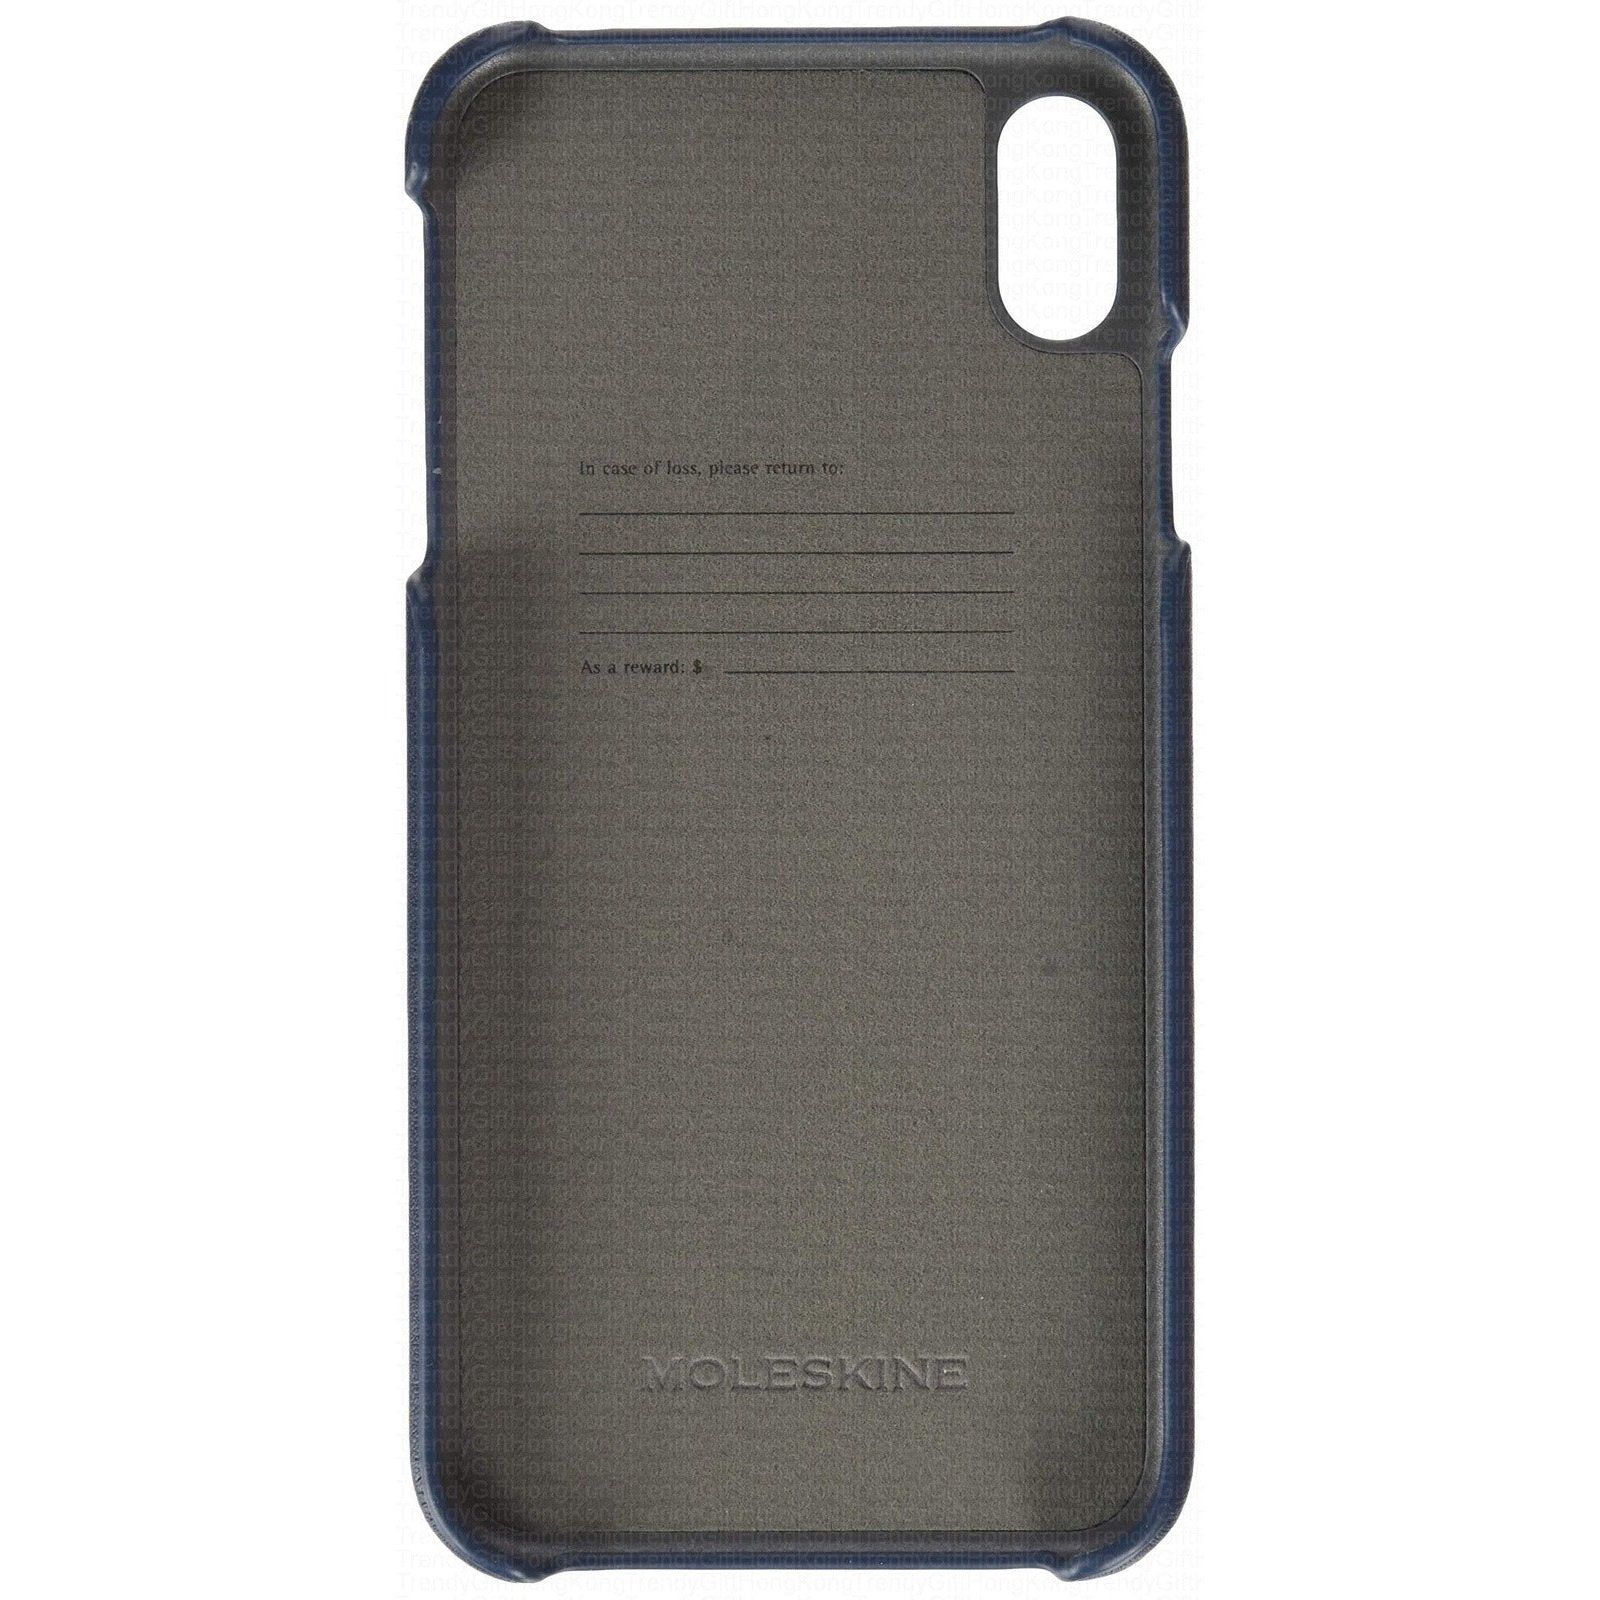 Moleskine Hard iPhone XS Max Case - Classic Notebook Design trendygifthk